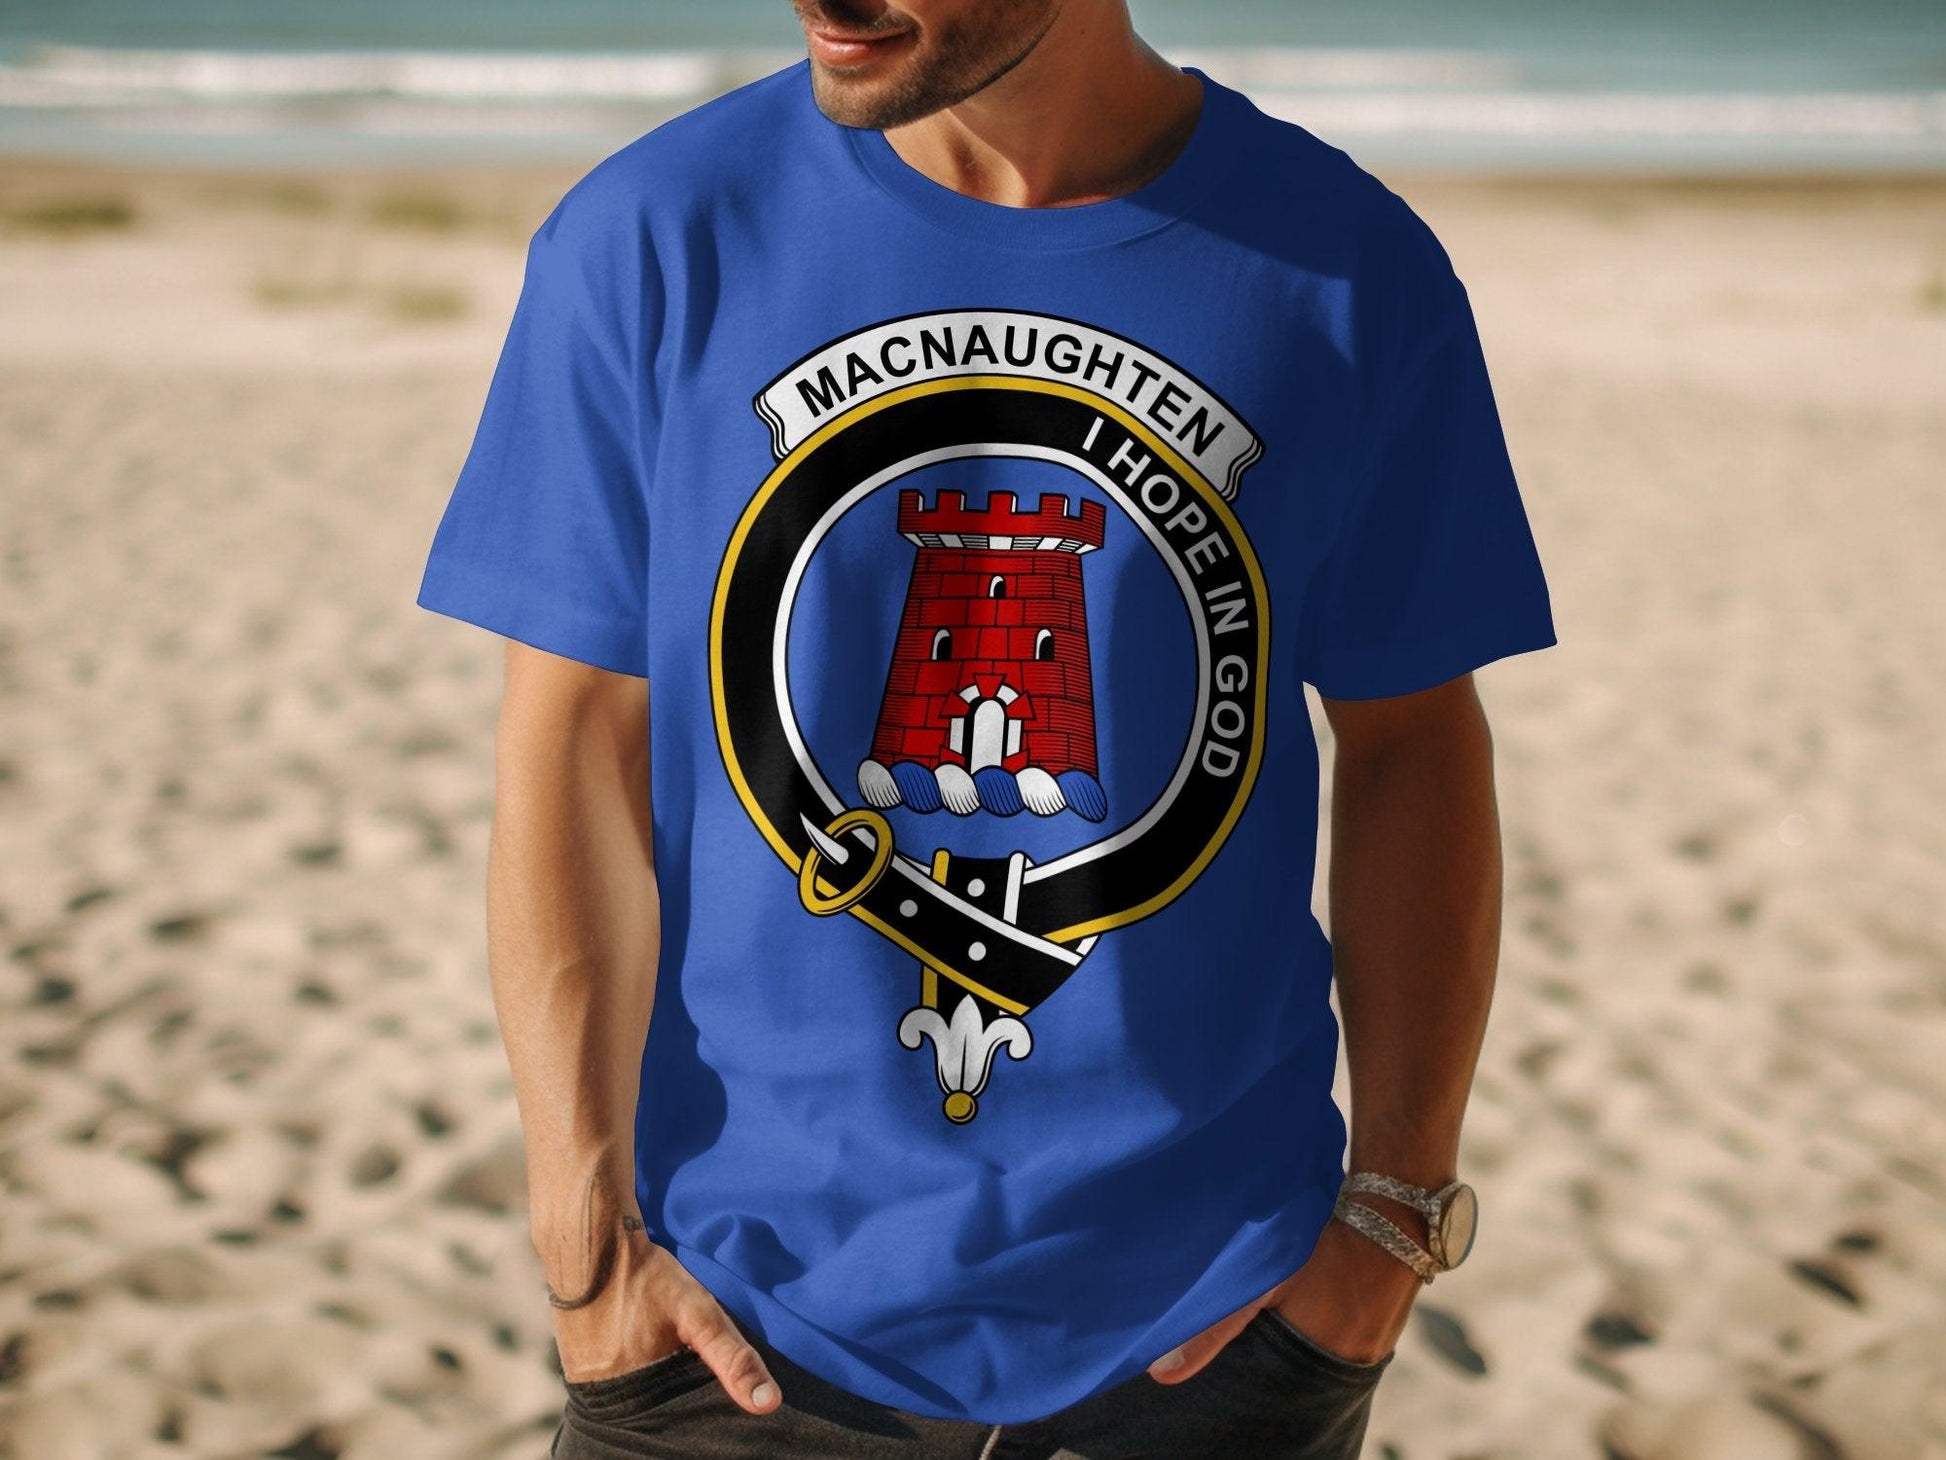 Scottish Clan Macnaughten Crest Highland Games T-Shirt - Living Stone Gifts